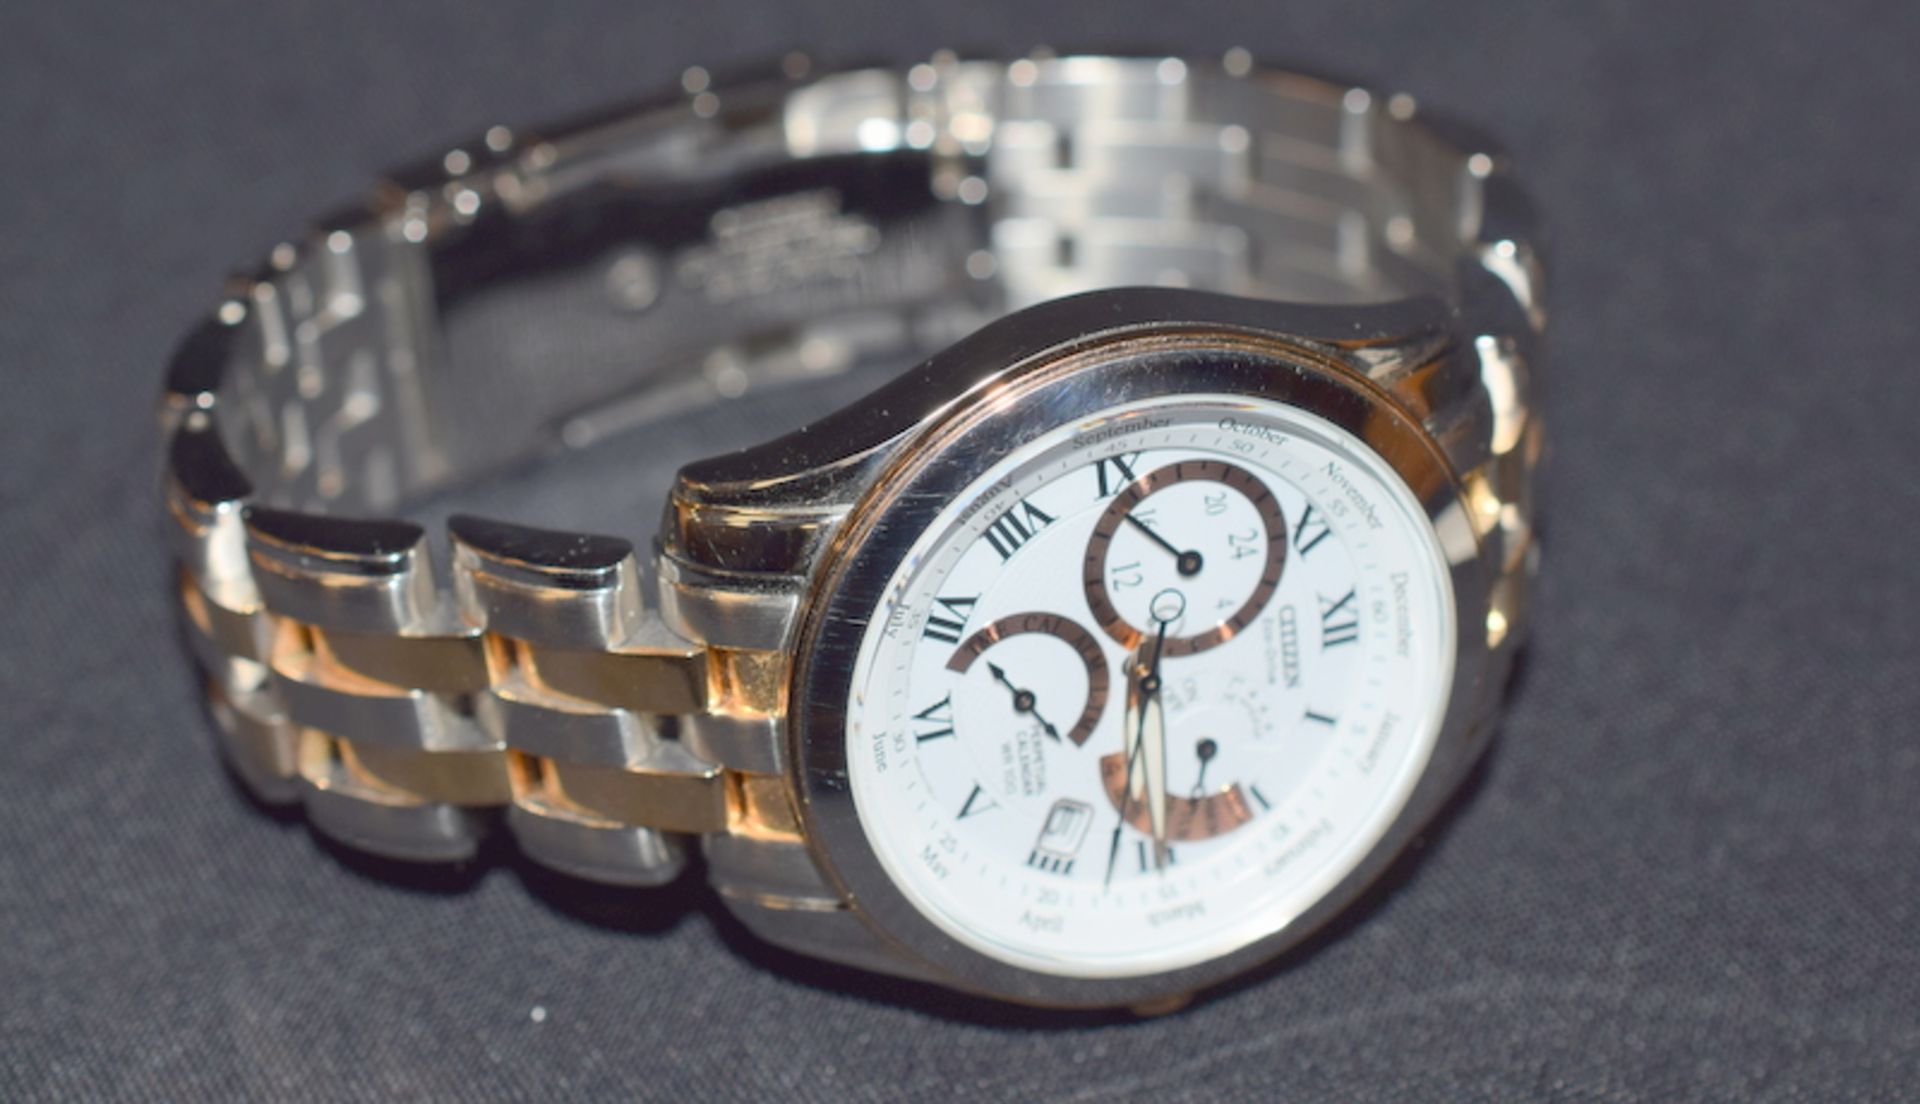 Citizen Watch Calibre 8700 Men's Quartz Watch with White Dial - Image 4 of 6